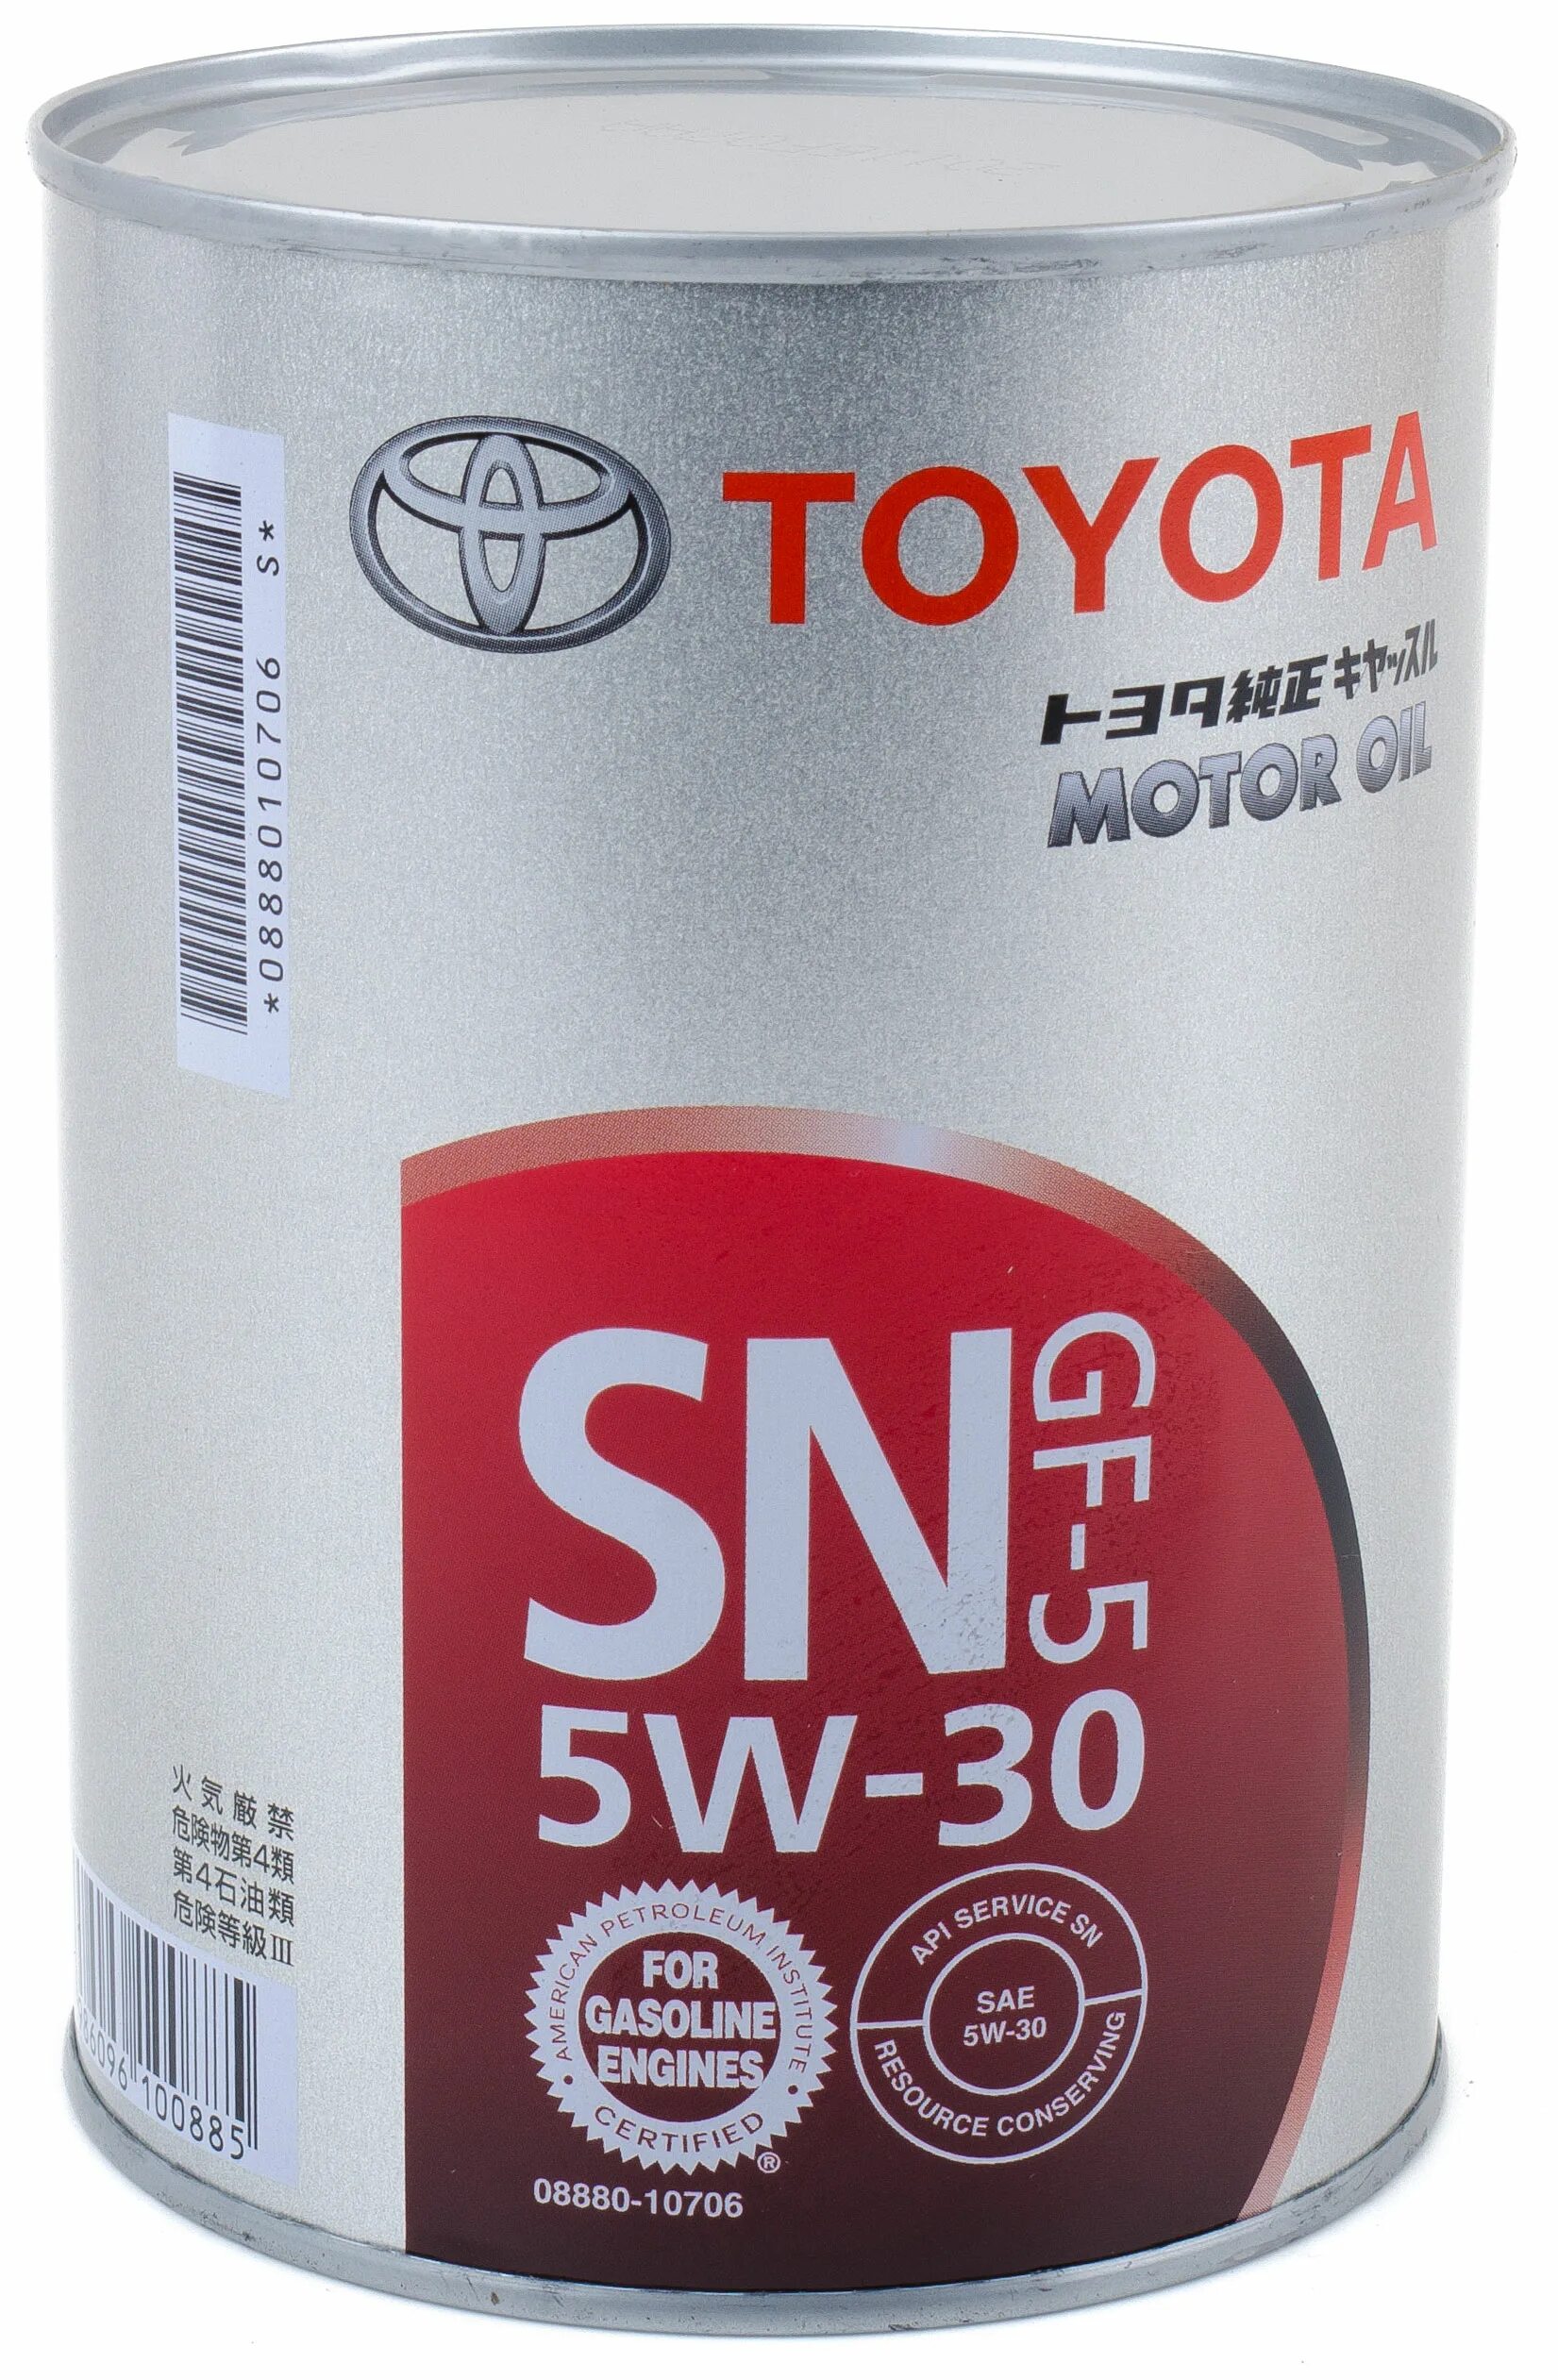 Масло sn sf. Toyota 5w-30 SN gf-5. Toyota SN/gf-5 5w-30 1л. Toyota Motor Oil SN SF-5 5w30. Toyota 08880-10706.